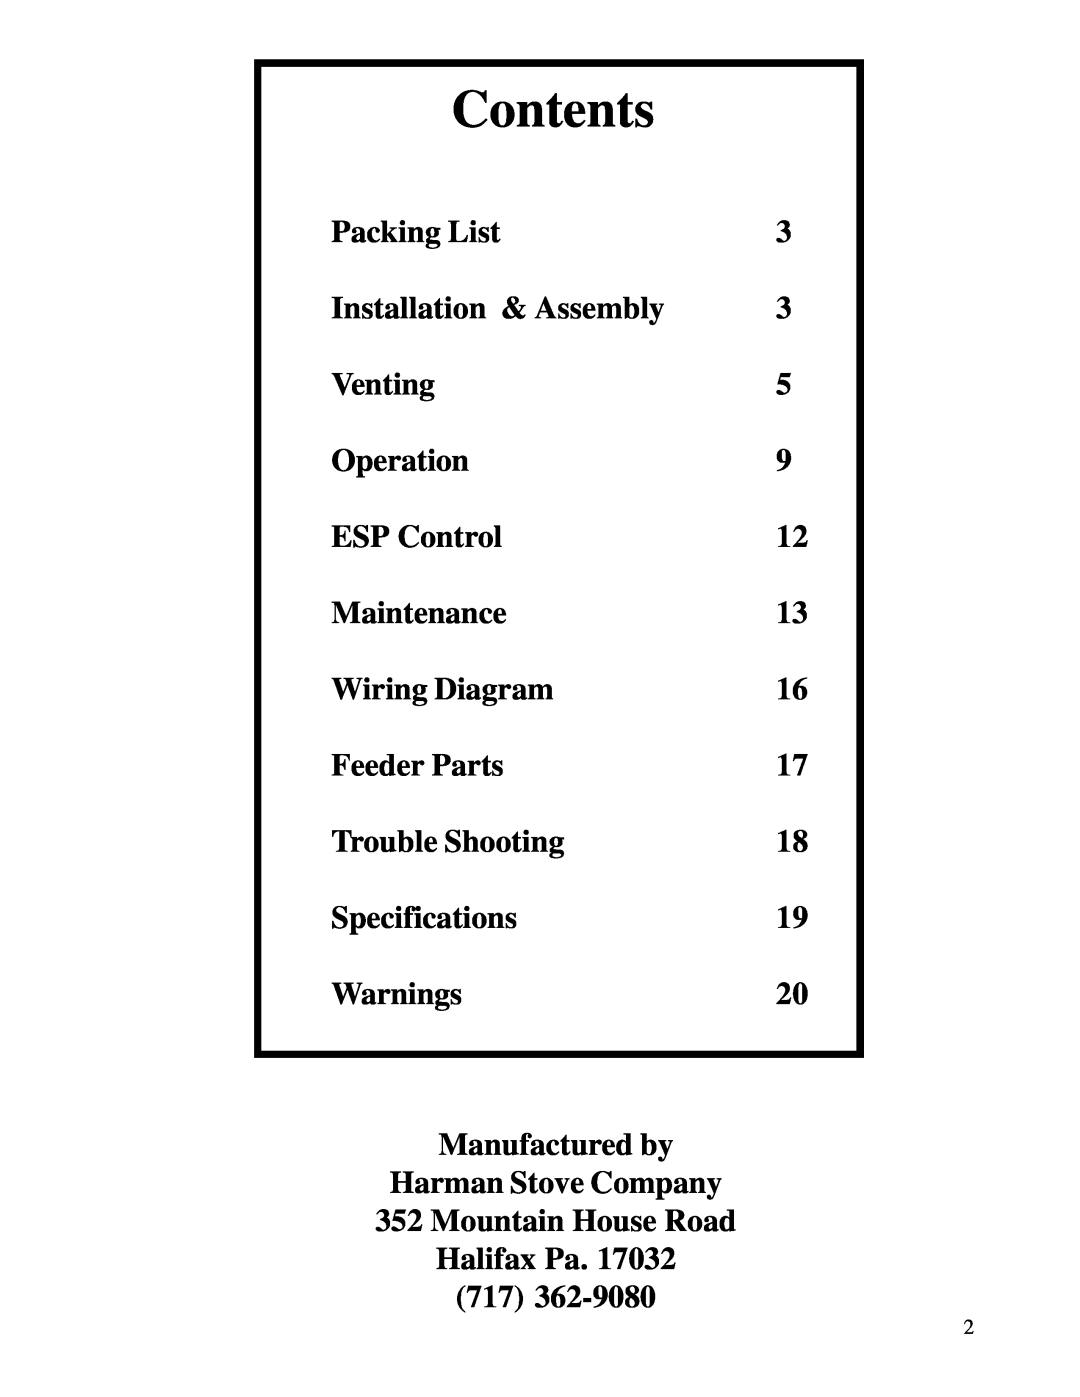 Harman Stove Company R6 owner manual Contents 